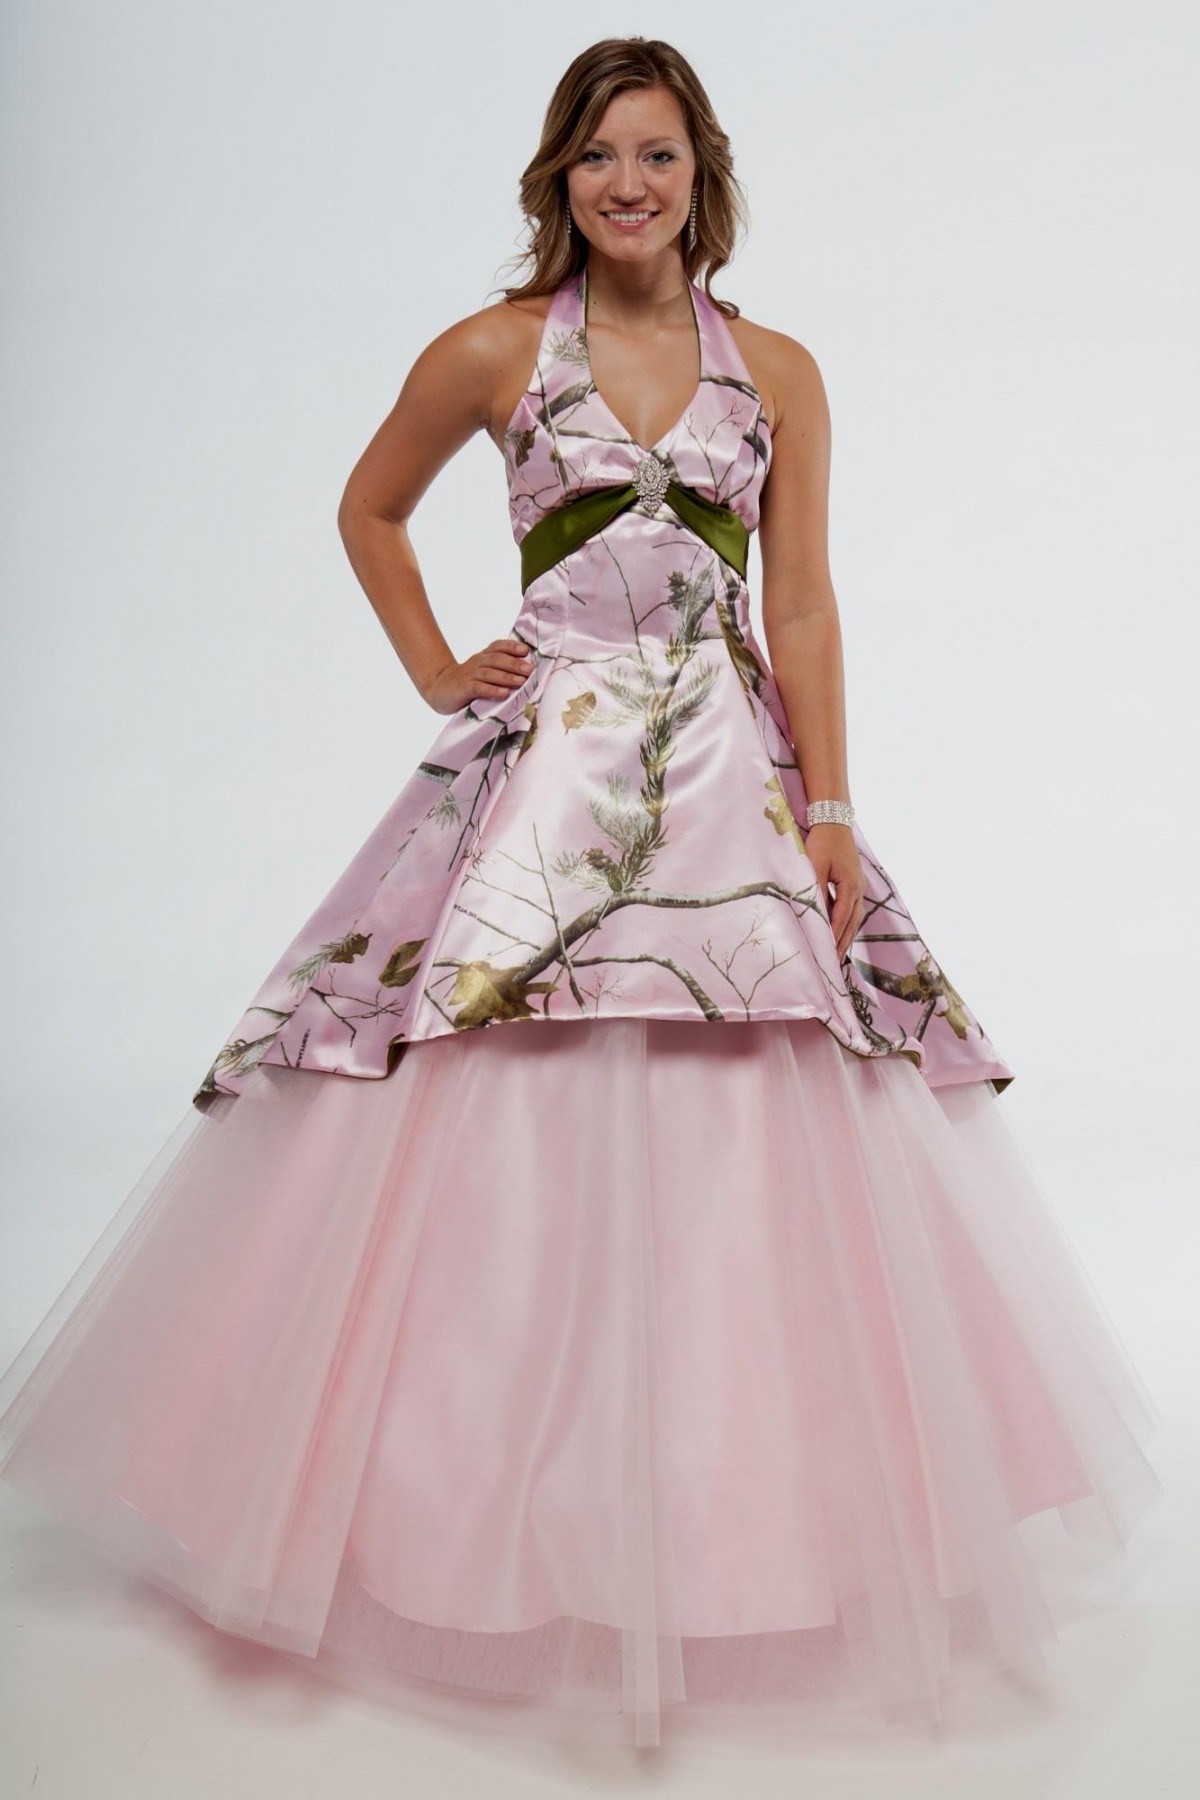 Pink Camo Wedding Dresses
 How to Look Feminine in Camo Wedding Dresses